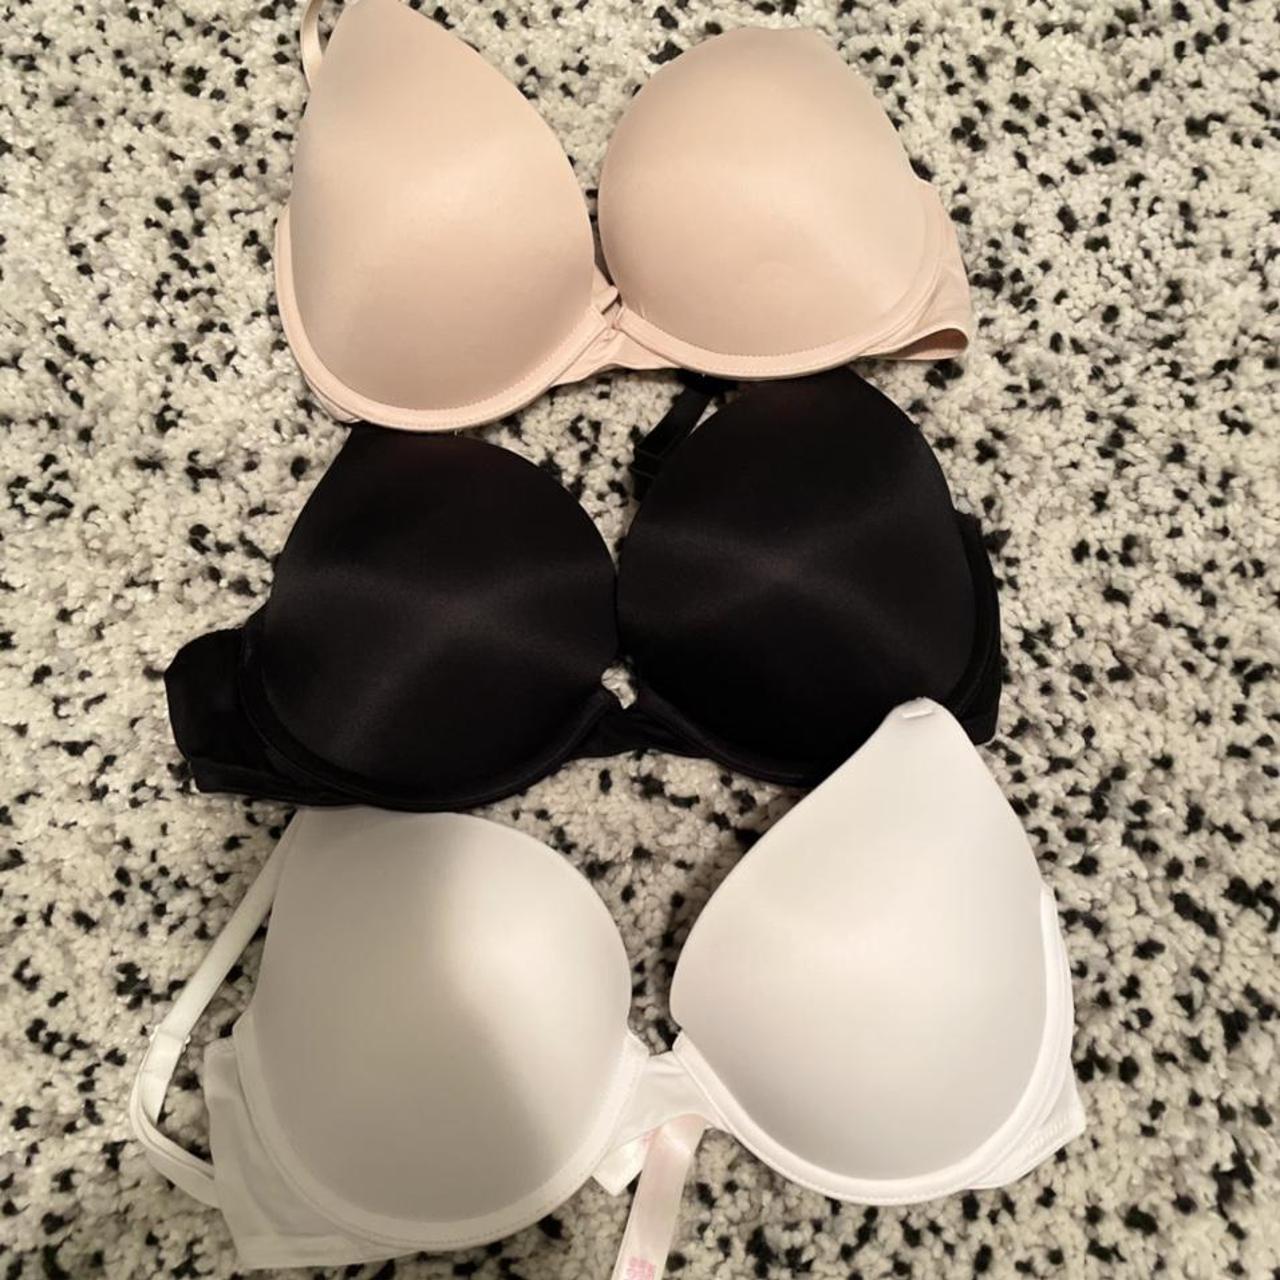 Victoria’s Secret PINK wear everywhere push up bra